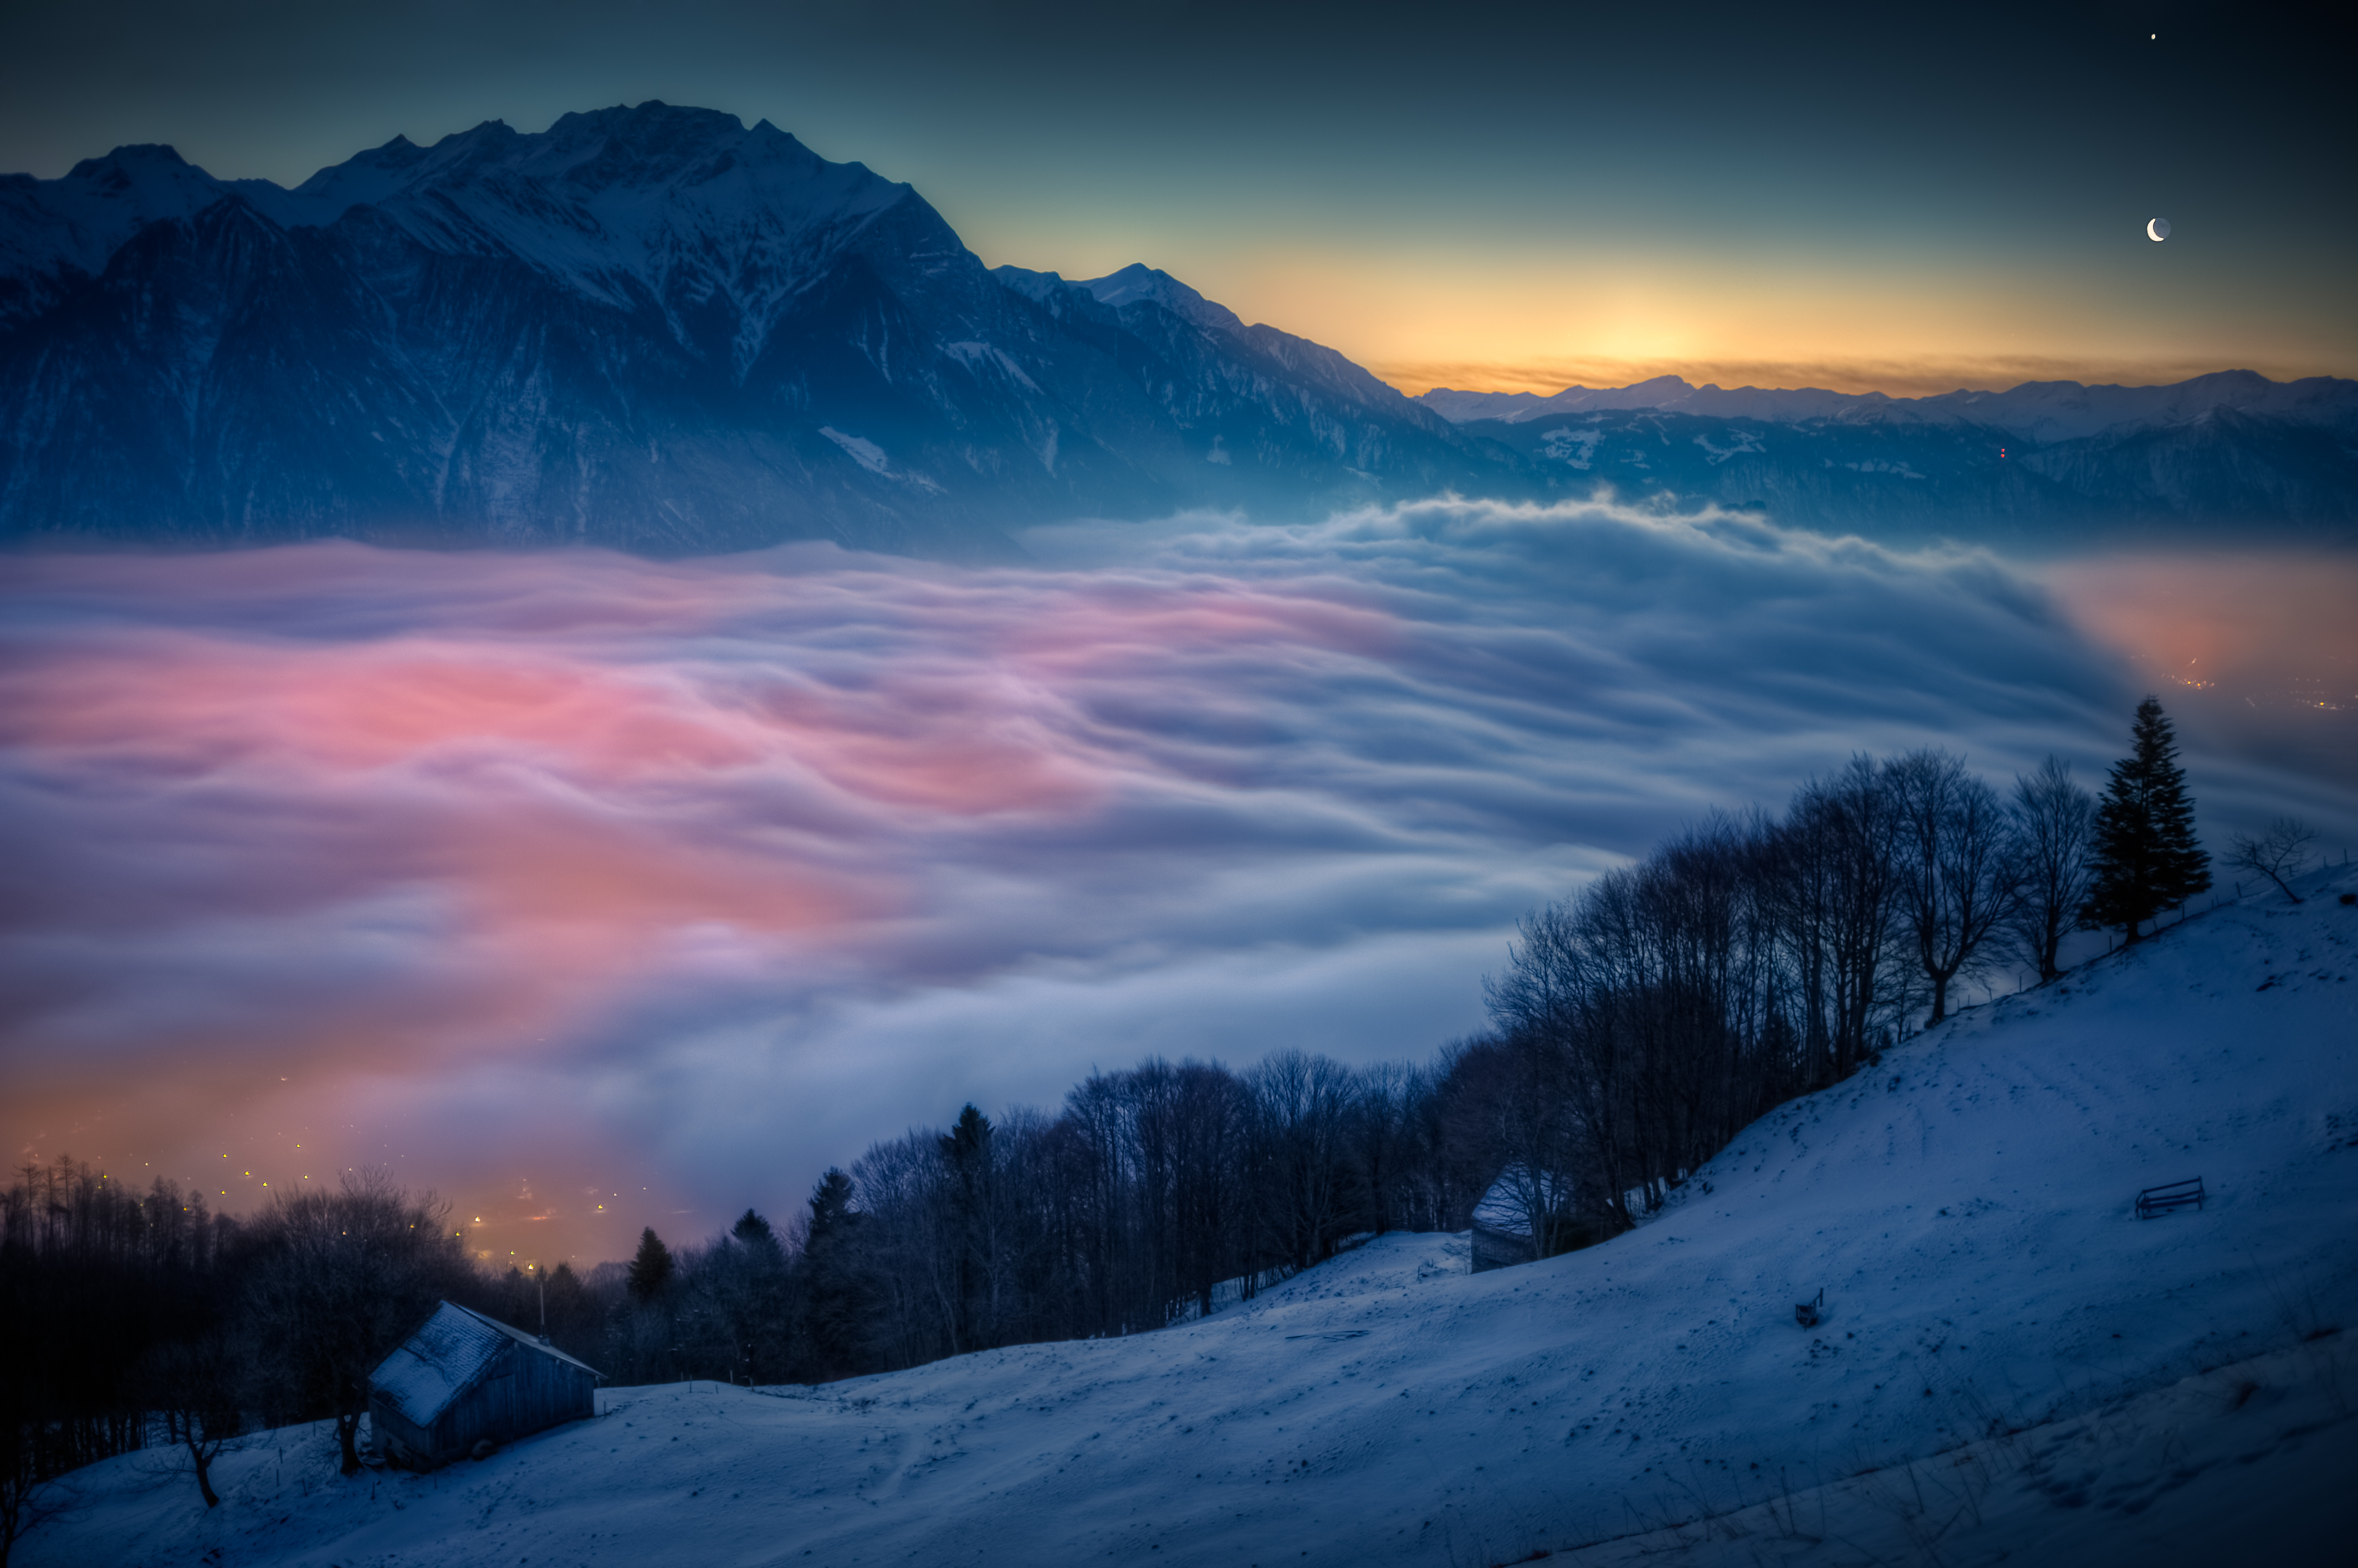 sea of clouds, photography, winter, cloud, evening, landscape, mountain